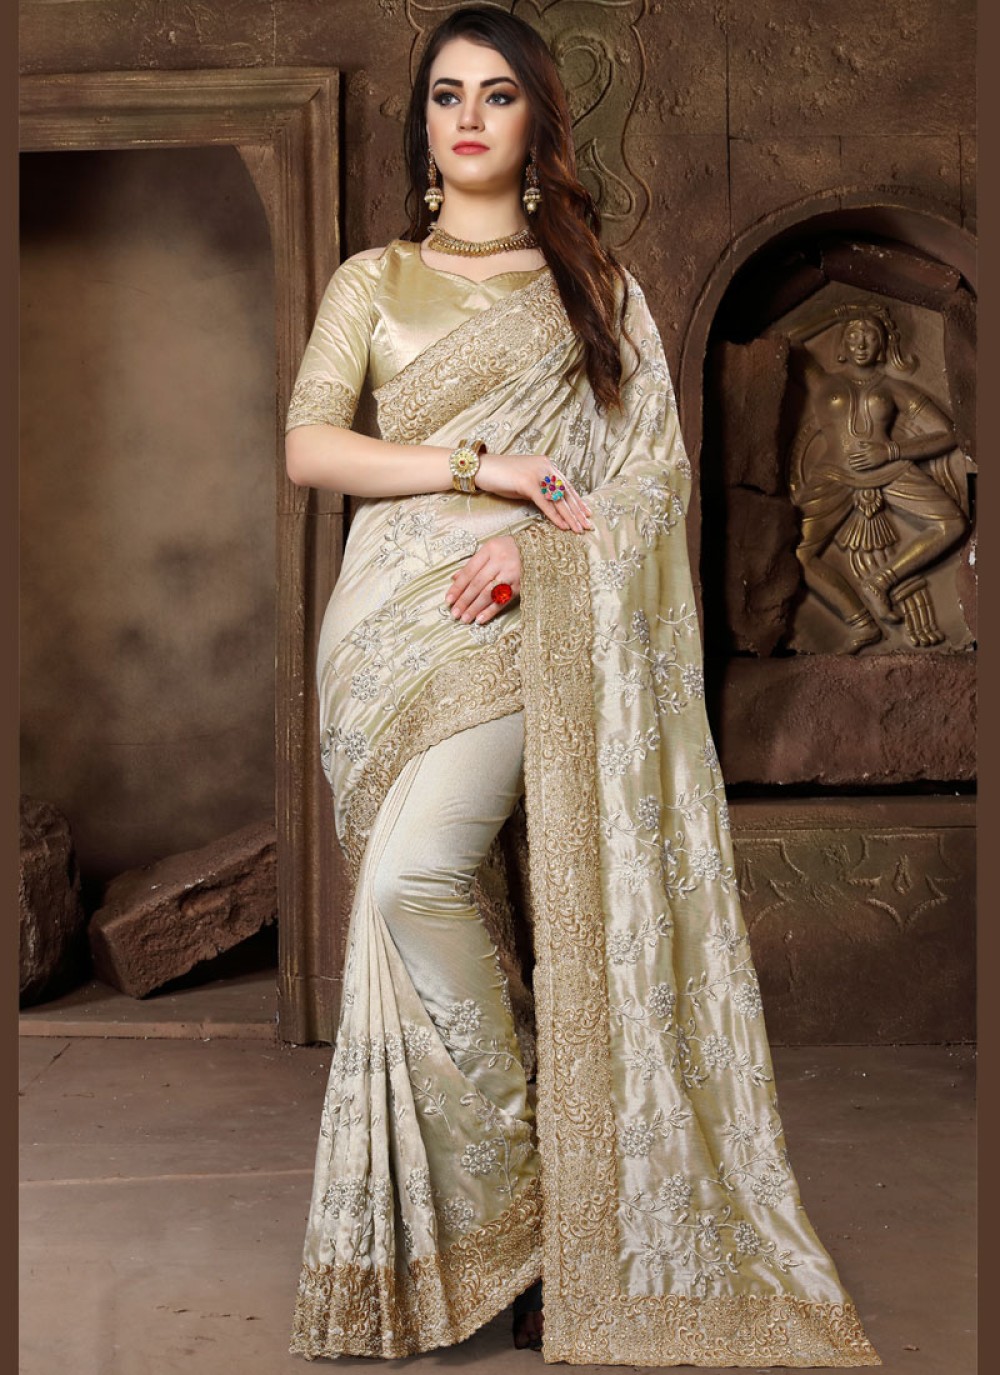 Discover more than 74 golden designer saree super hot